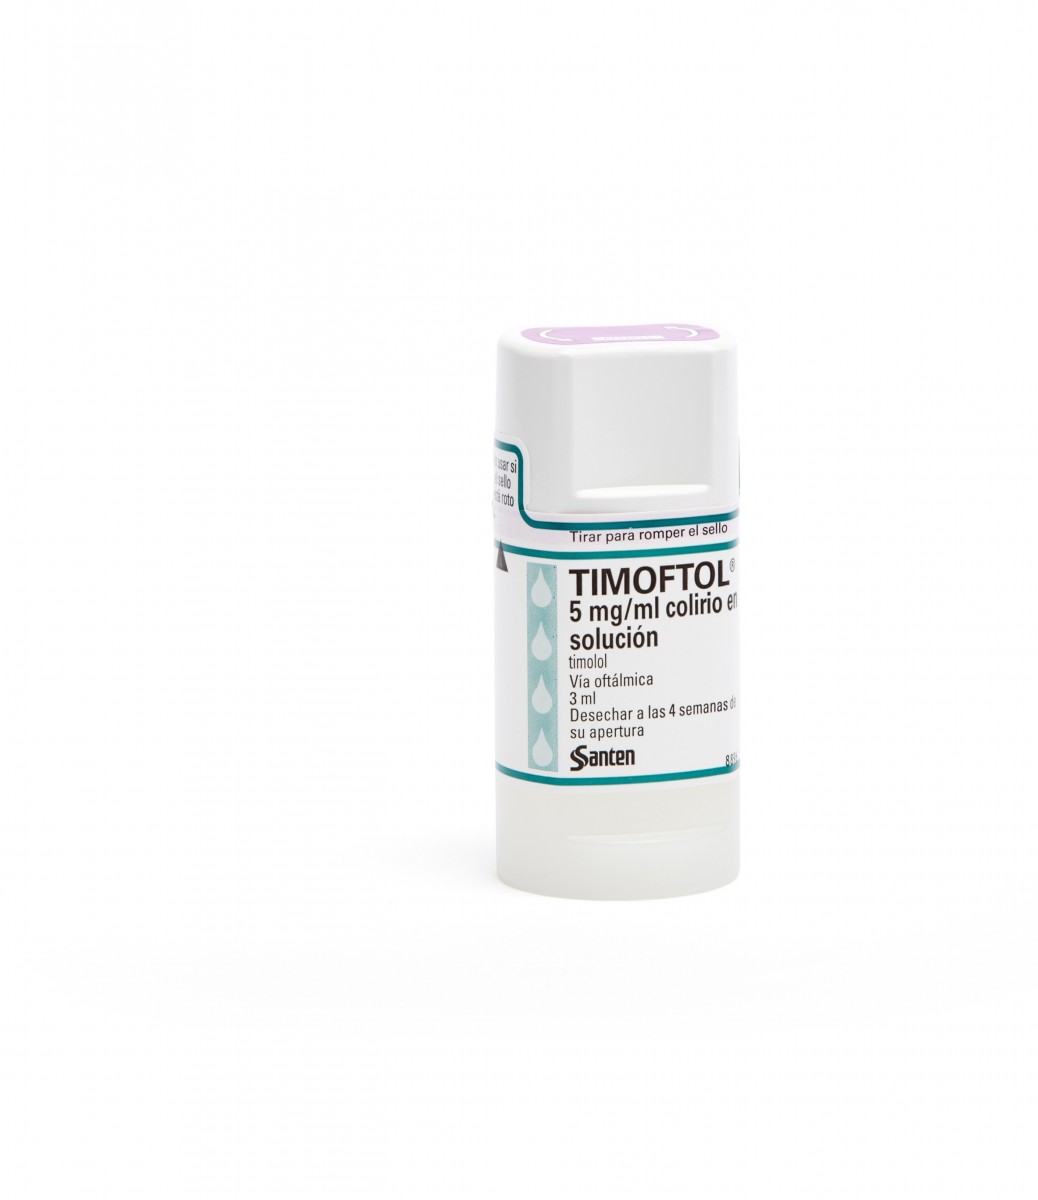 TIMOFTOL 5 mg/ml COLIRIO EN SOLUCION,1 frasco de 5 ml fotografía de la forma farmacéutica.